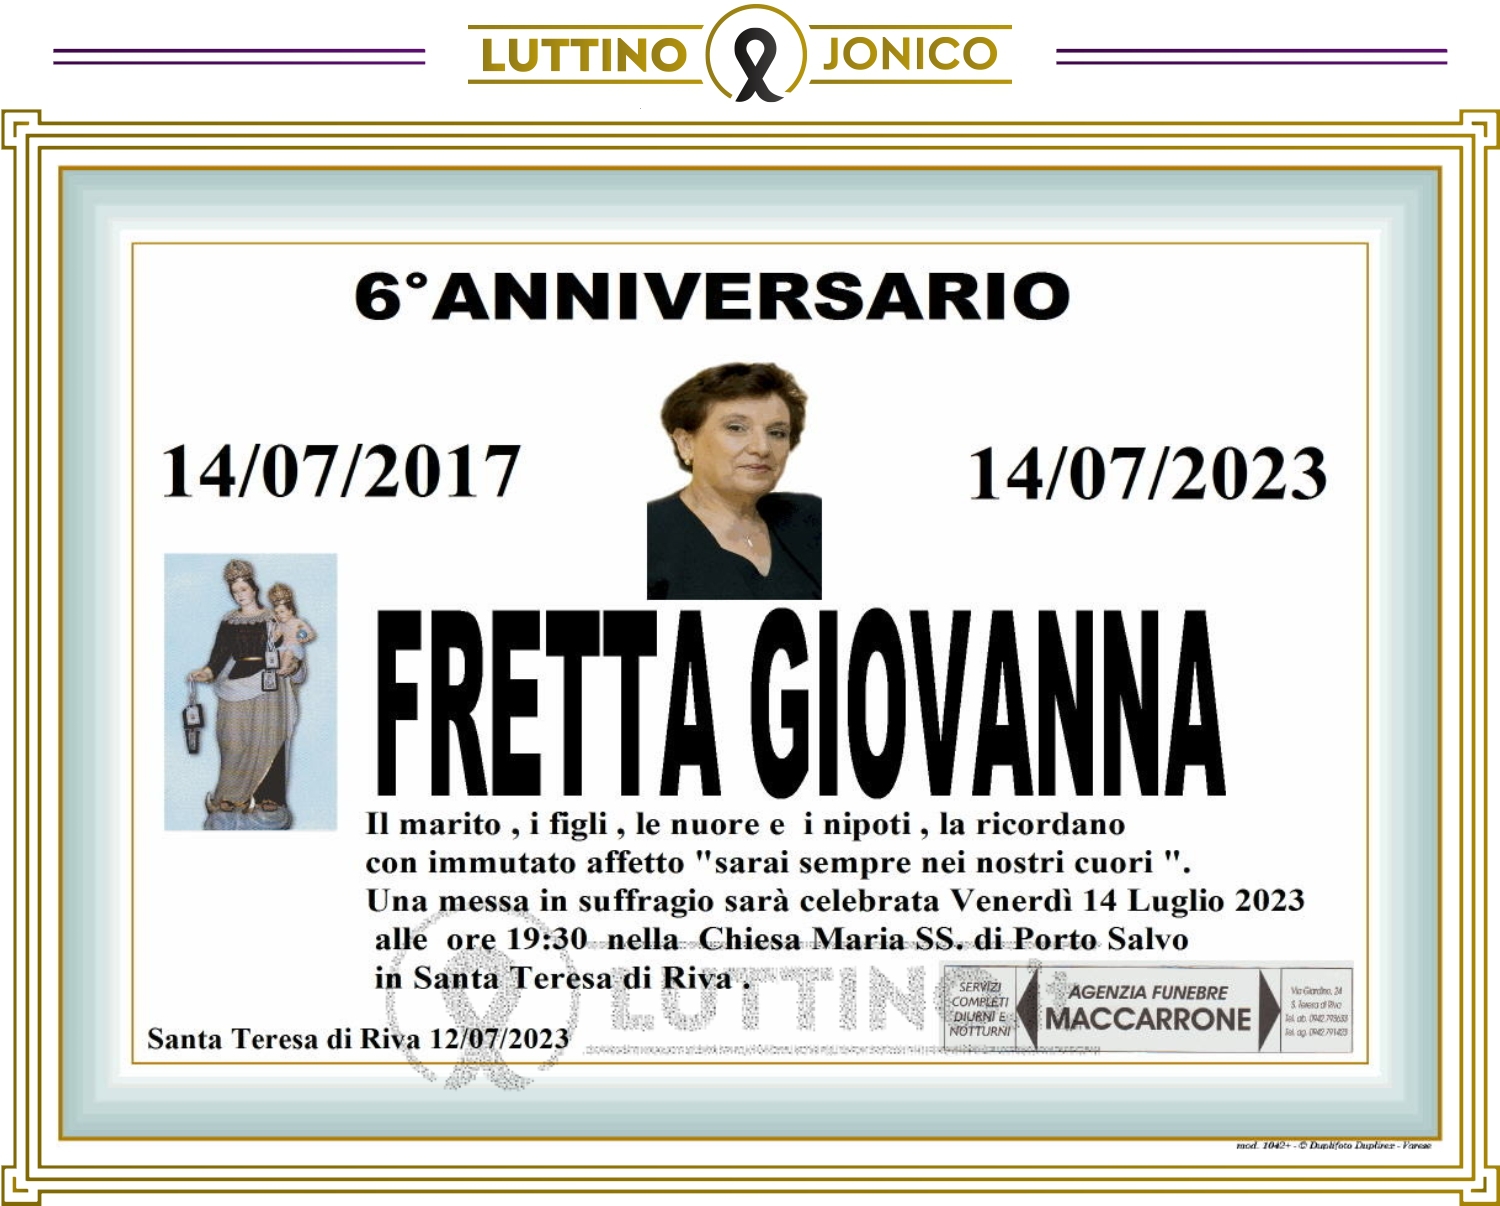 Giovanna Fretta